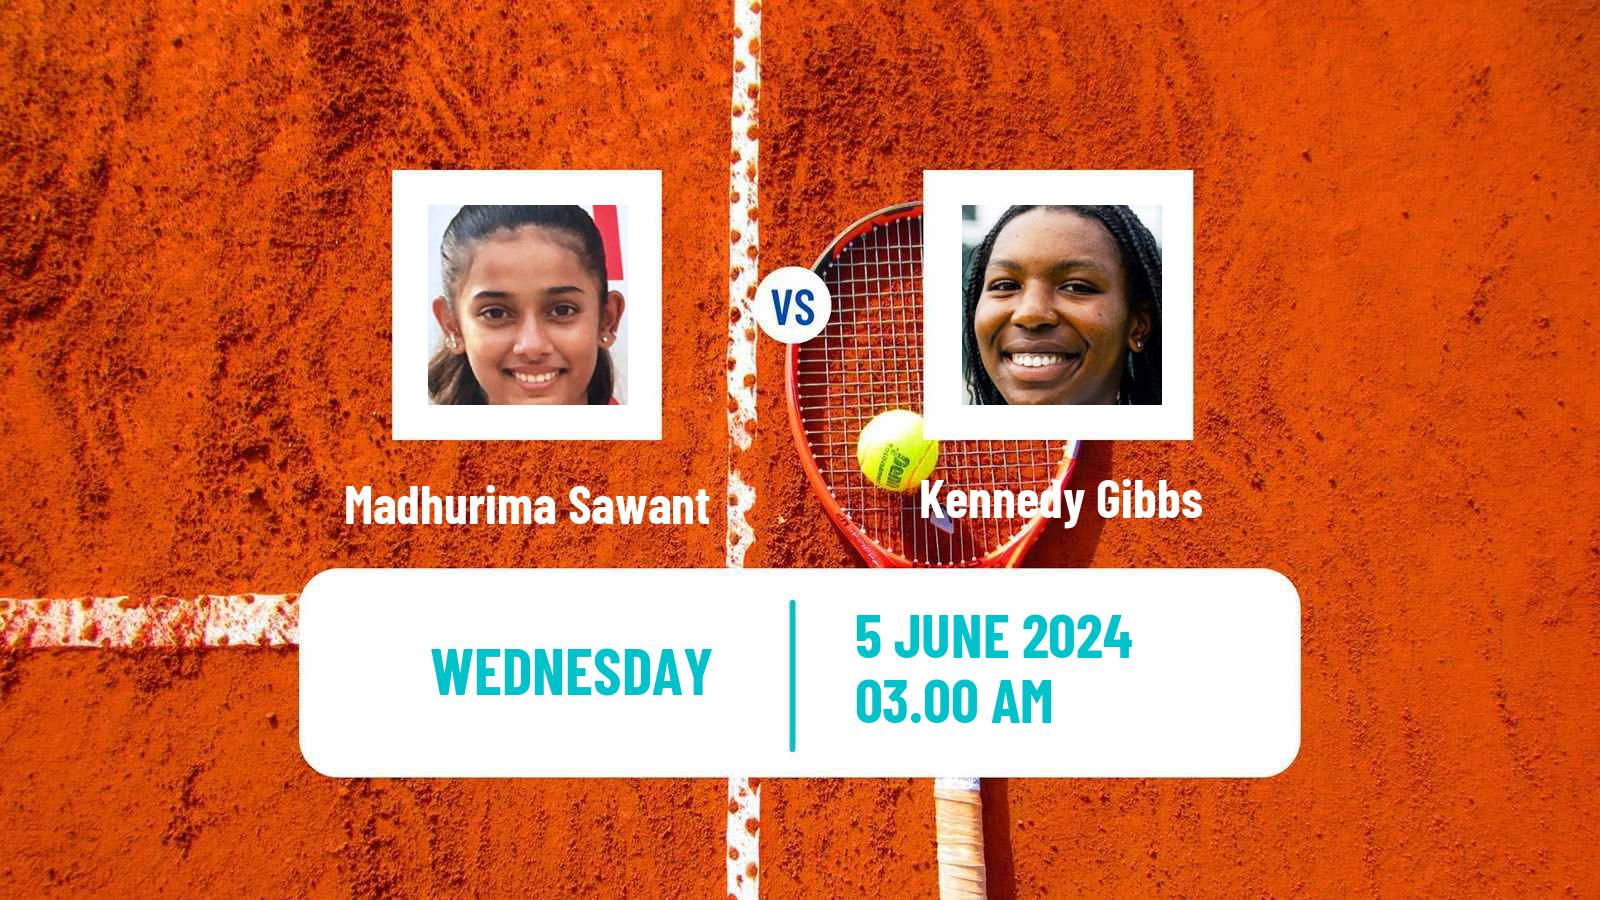 Tennis ITF W15 Madrid Women Madhurima Sawant - Kennedy Gibbs